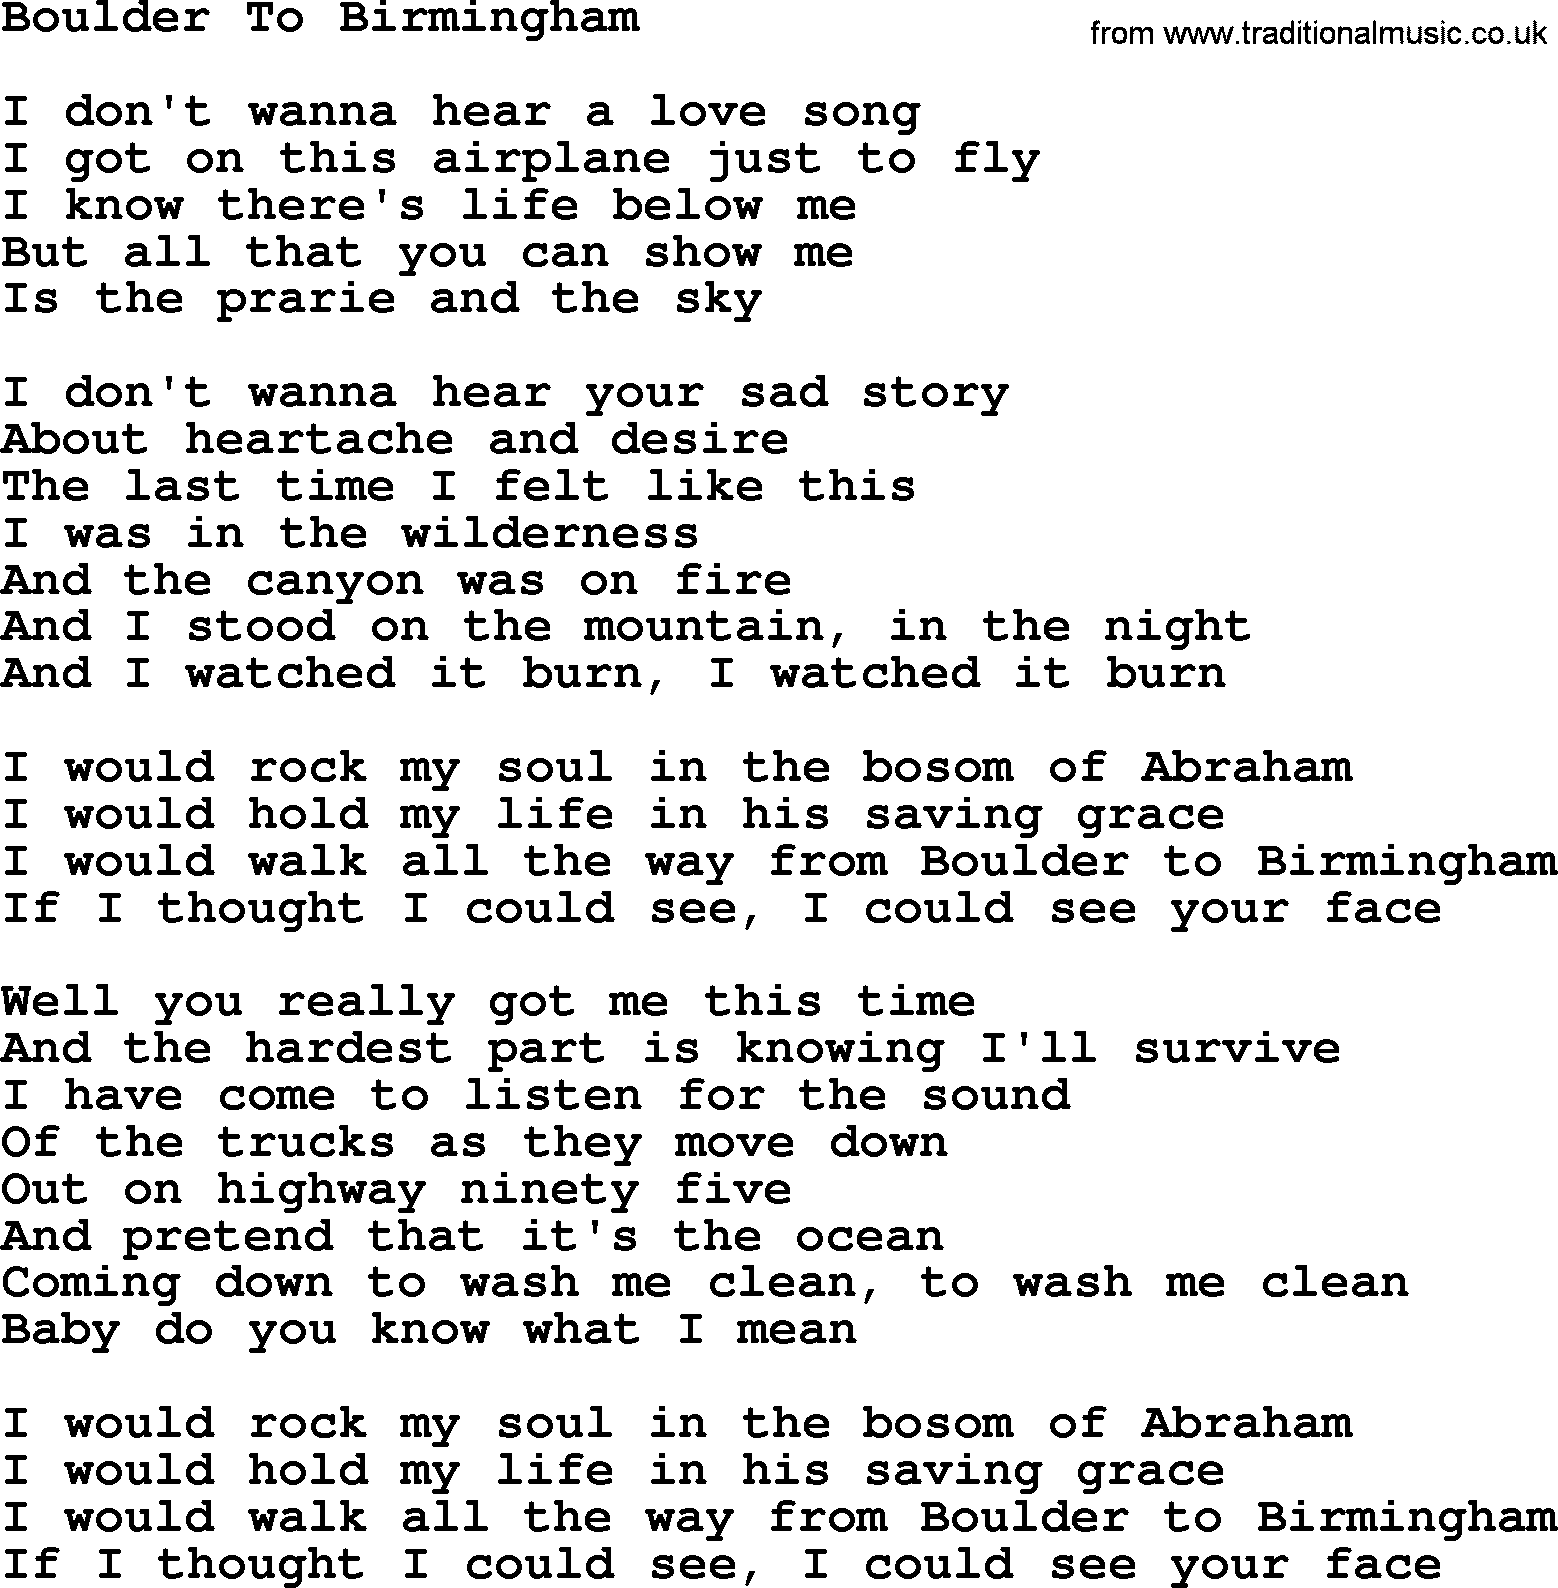 Joan Baez song Boulder To Birmingham, lyrics